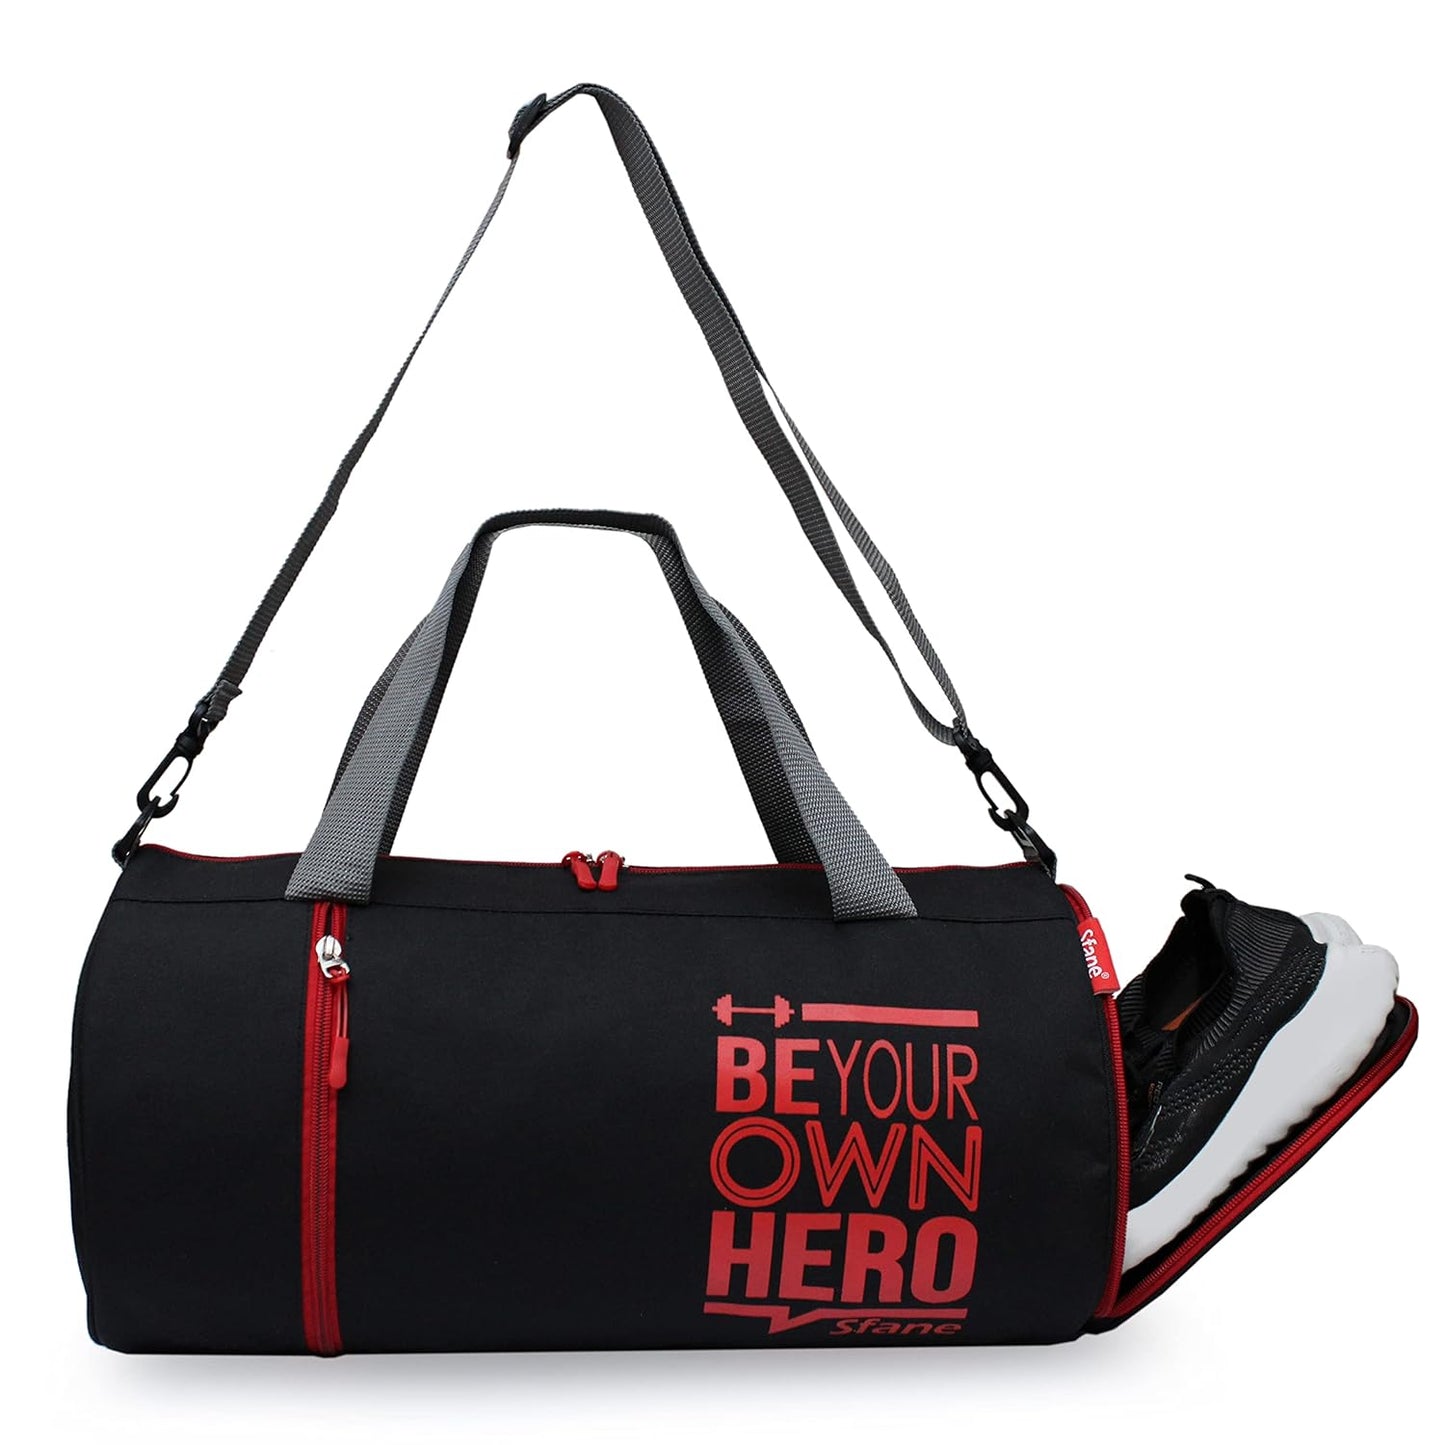 SFANE Polyester Red Duffel Gym Bag, Shoulder Bag, Sports Bag for Men & Women with Separate Shoe Compartment (Black)